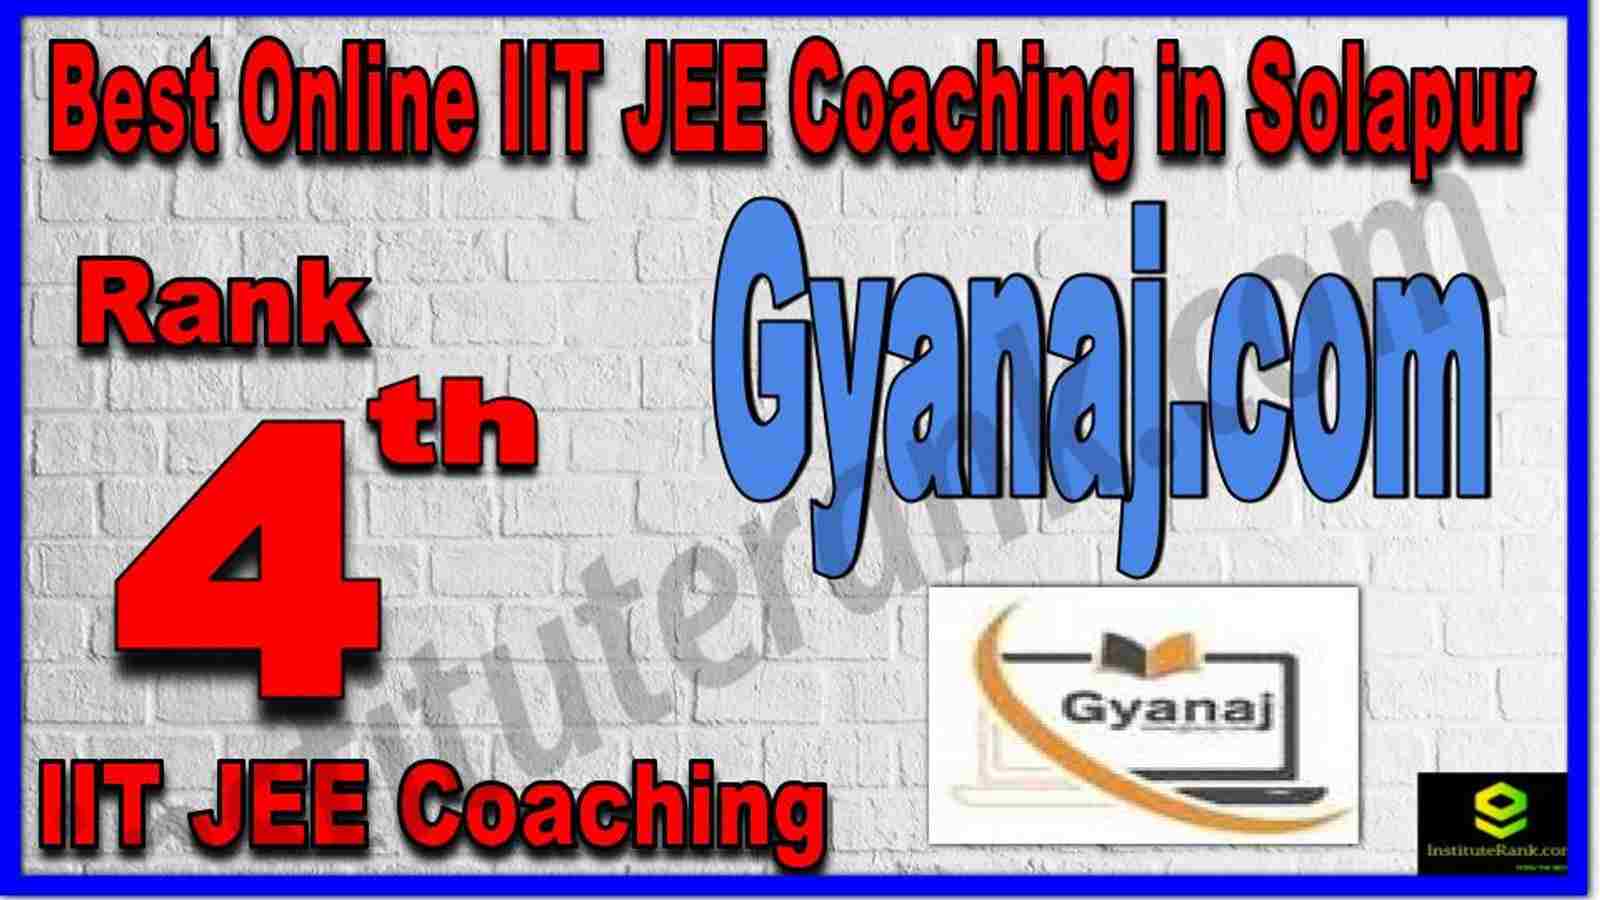 Rank 4th Best Online IIT JEE Coaching in Solapur